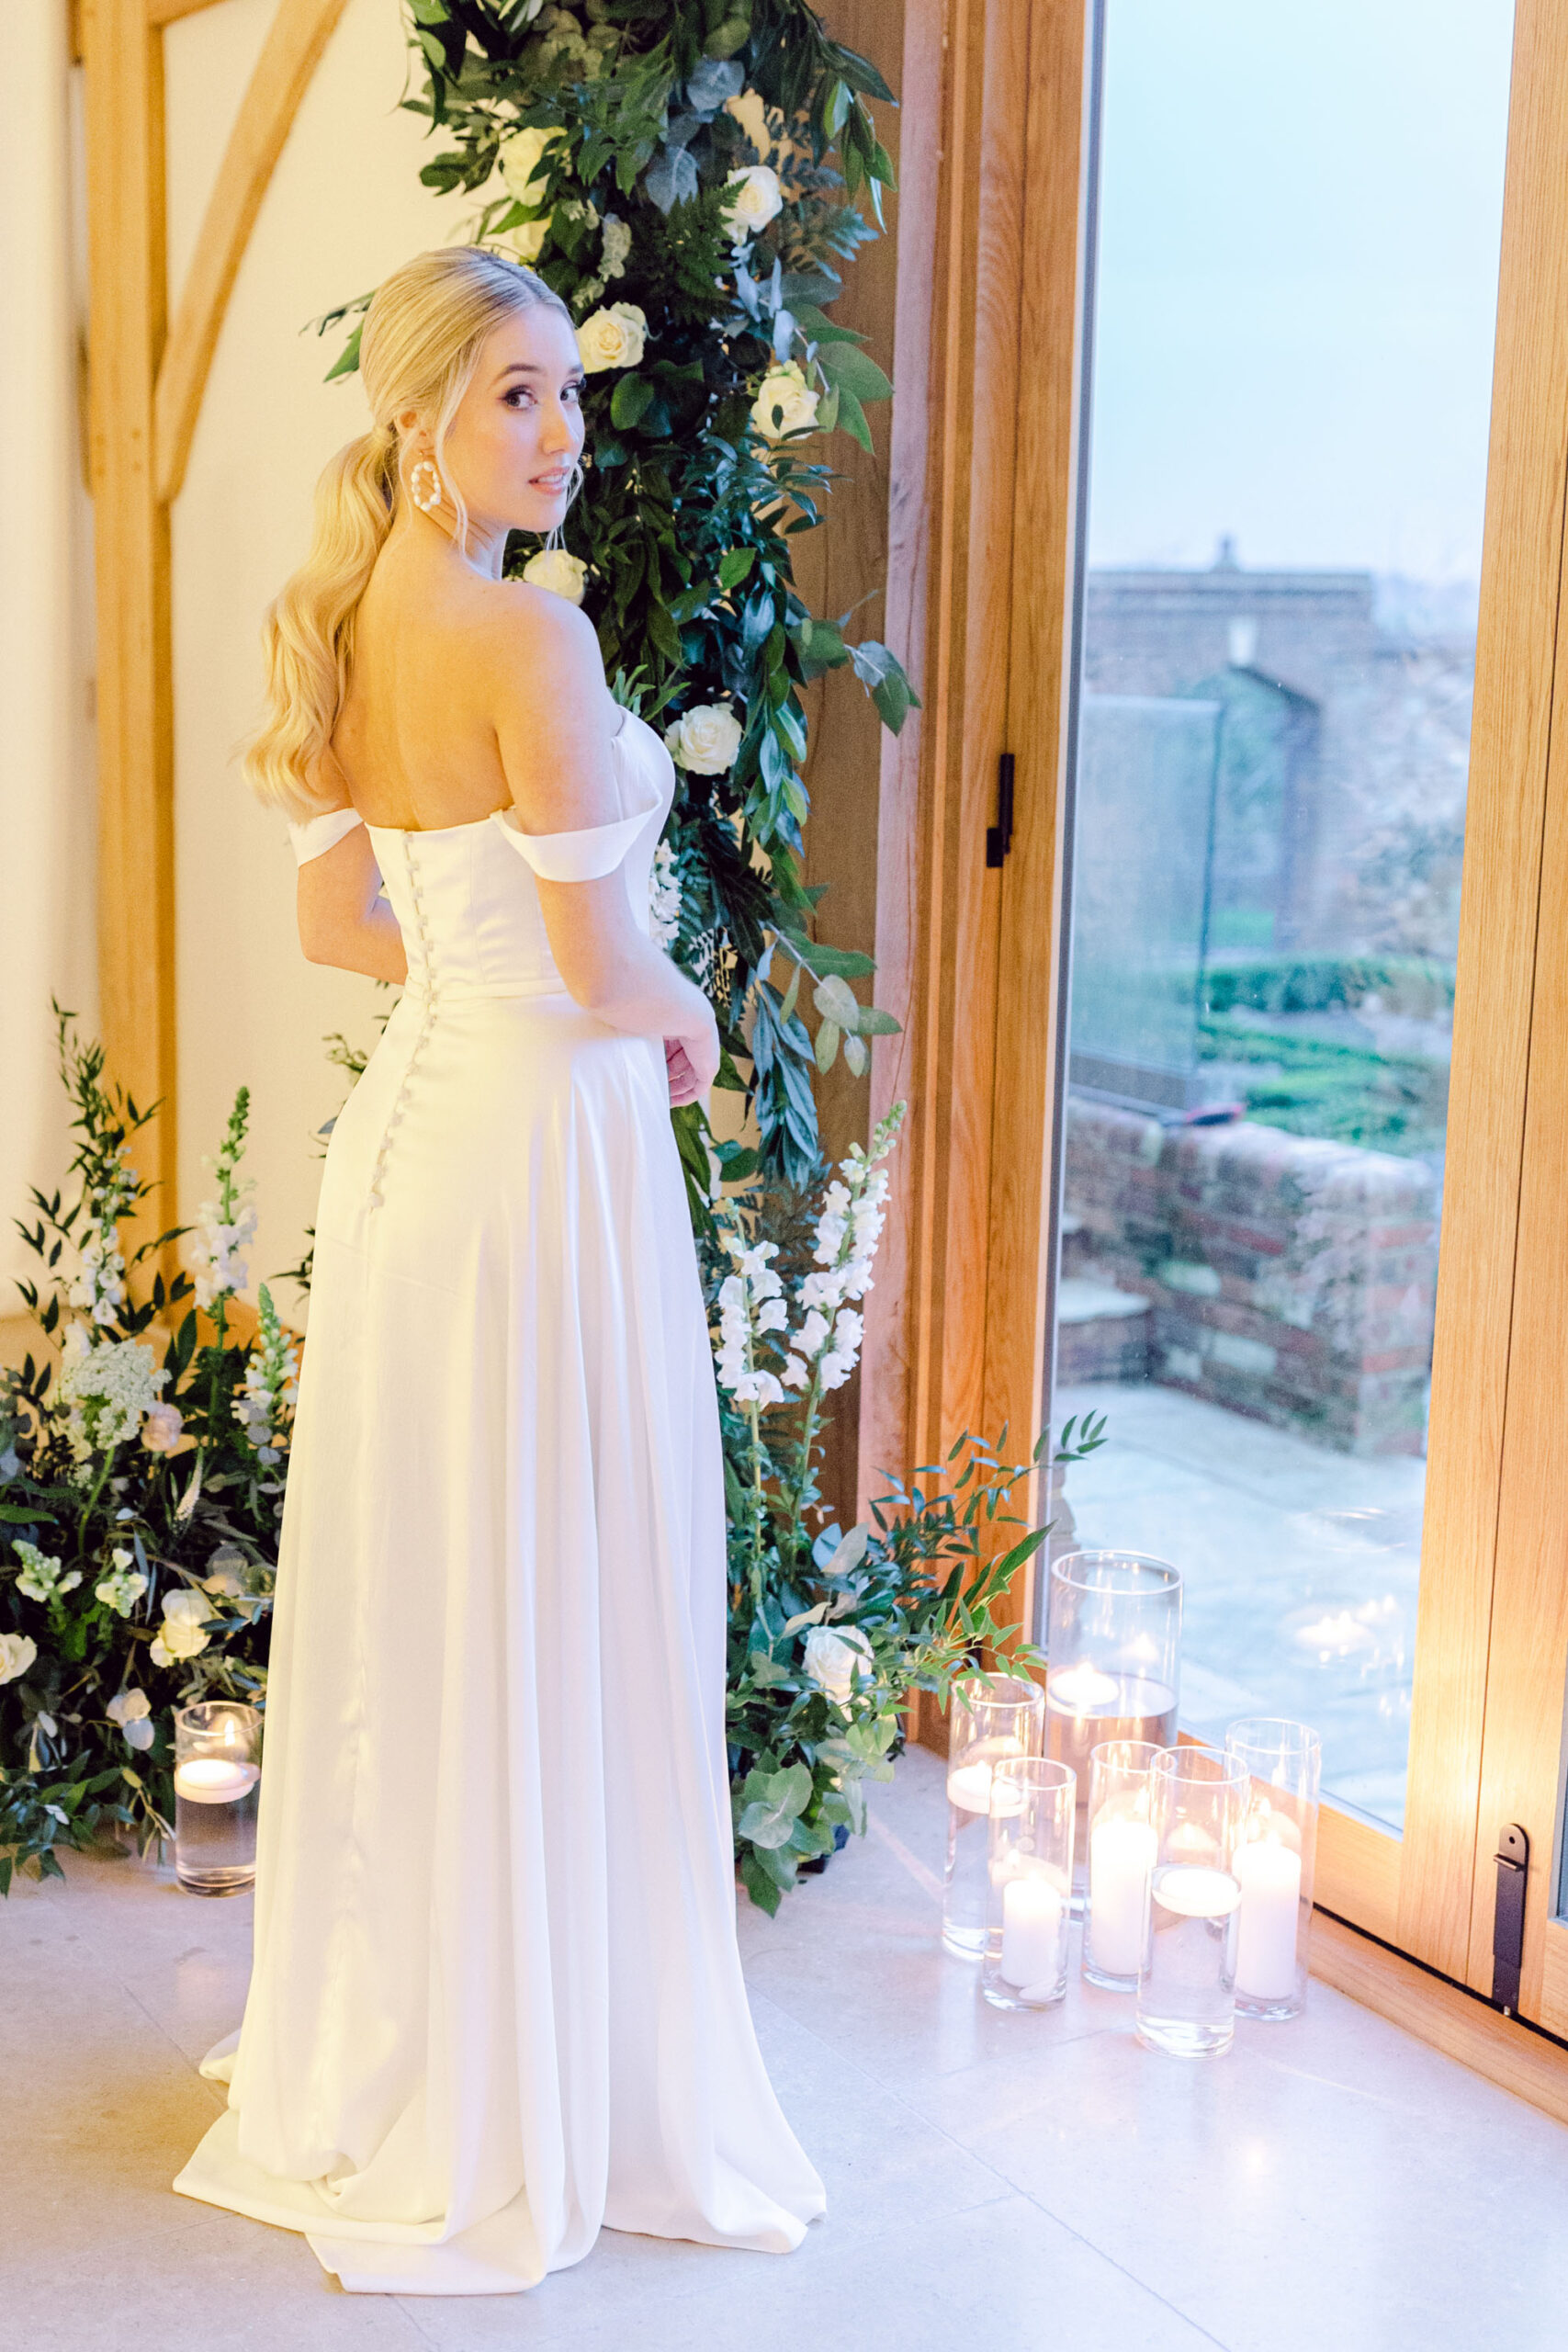 Elegant modern wedding styling inspiration with Illy Elizabeth Weddings in Staffordshire. Flowers are white and blush British botanicals. Image credit Natalie D Photography